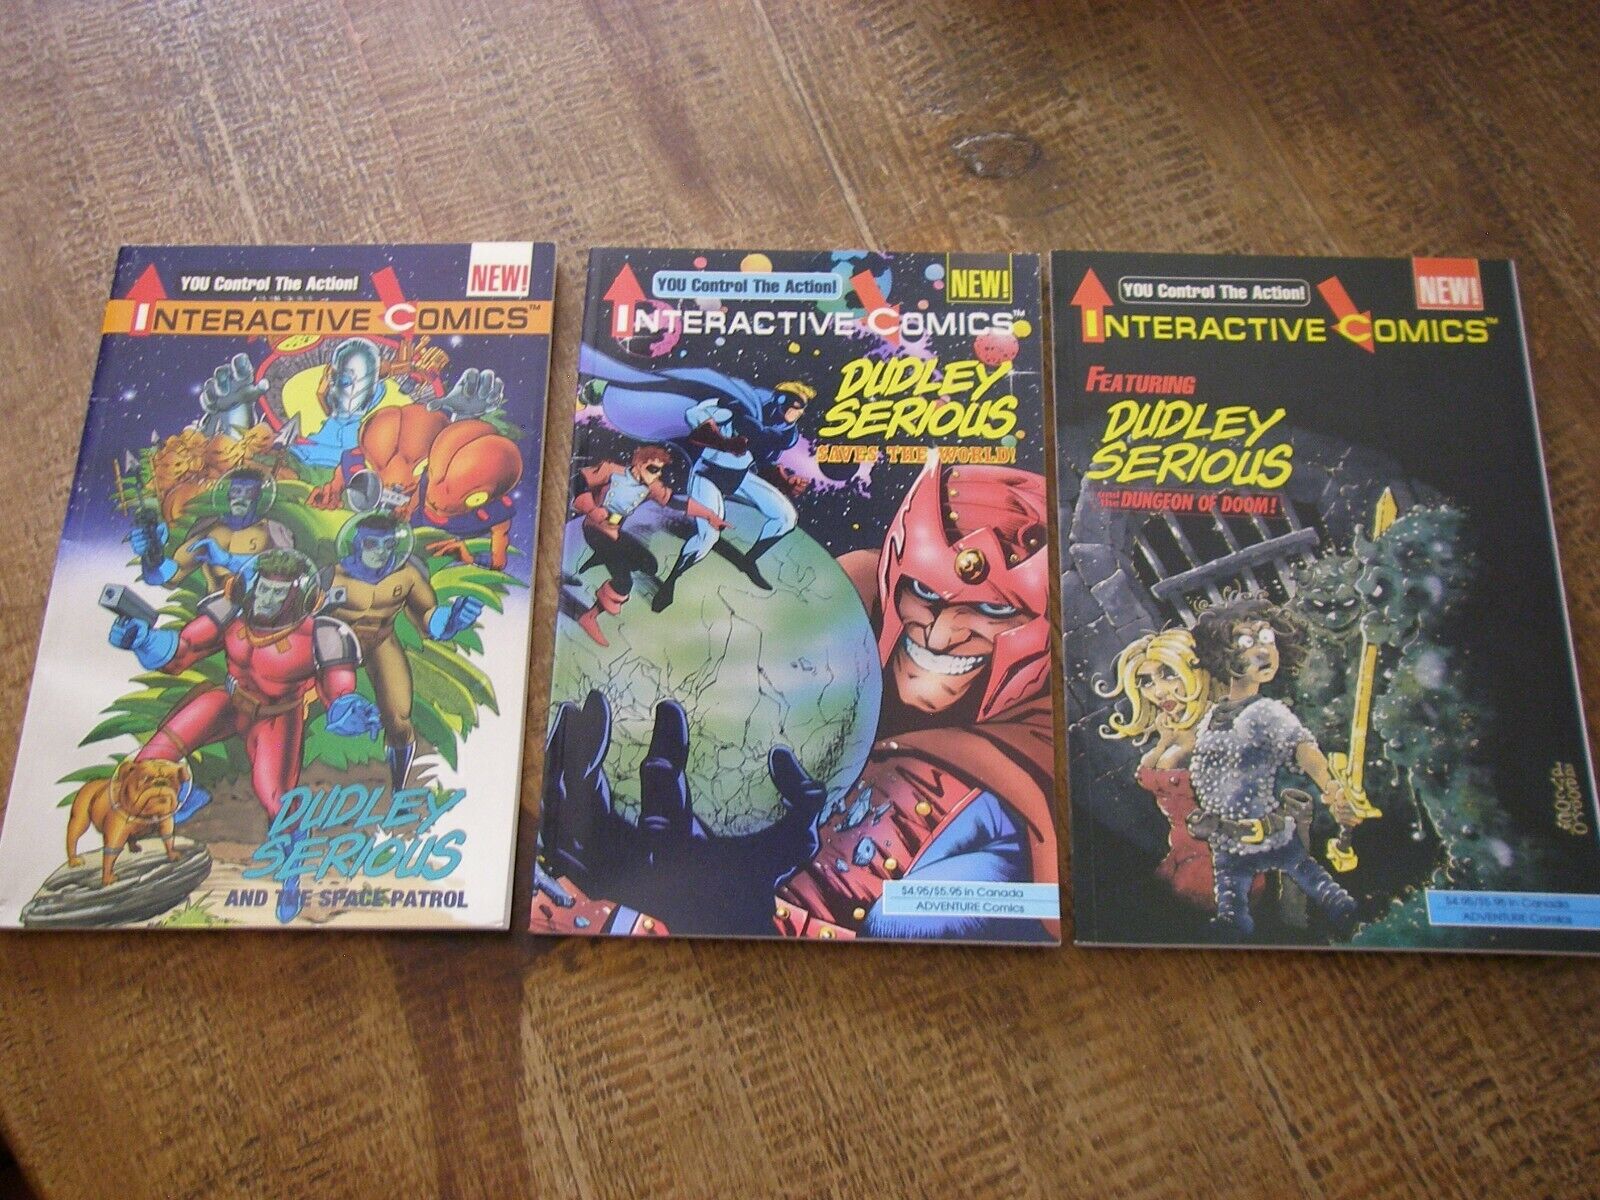 Interactive Comics lot of 3 Dudley Serious prestige comics,Dave Cooper vf/vf/fn+